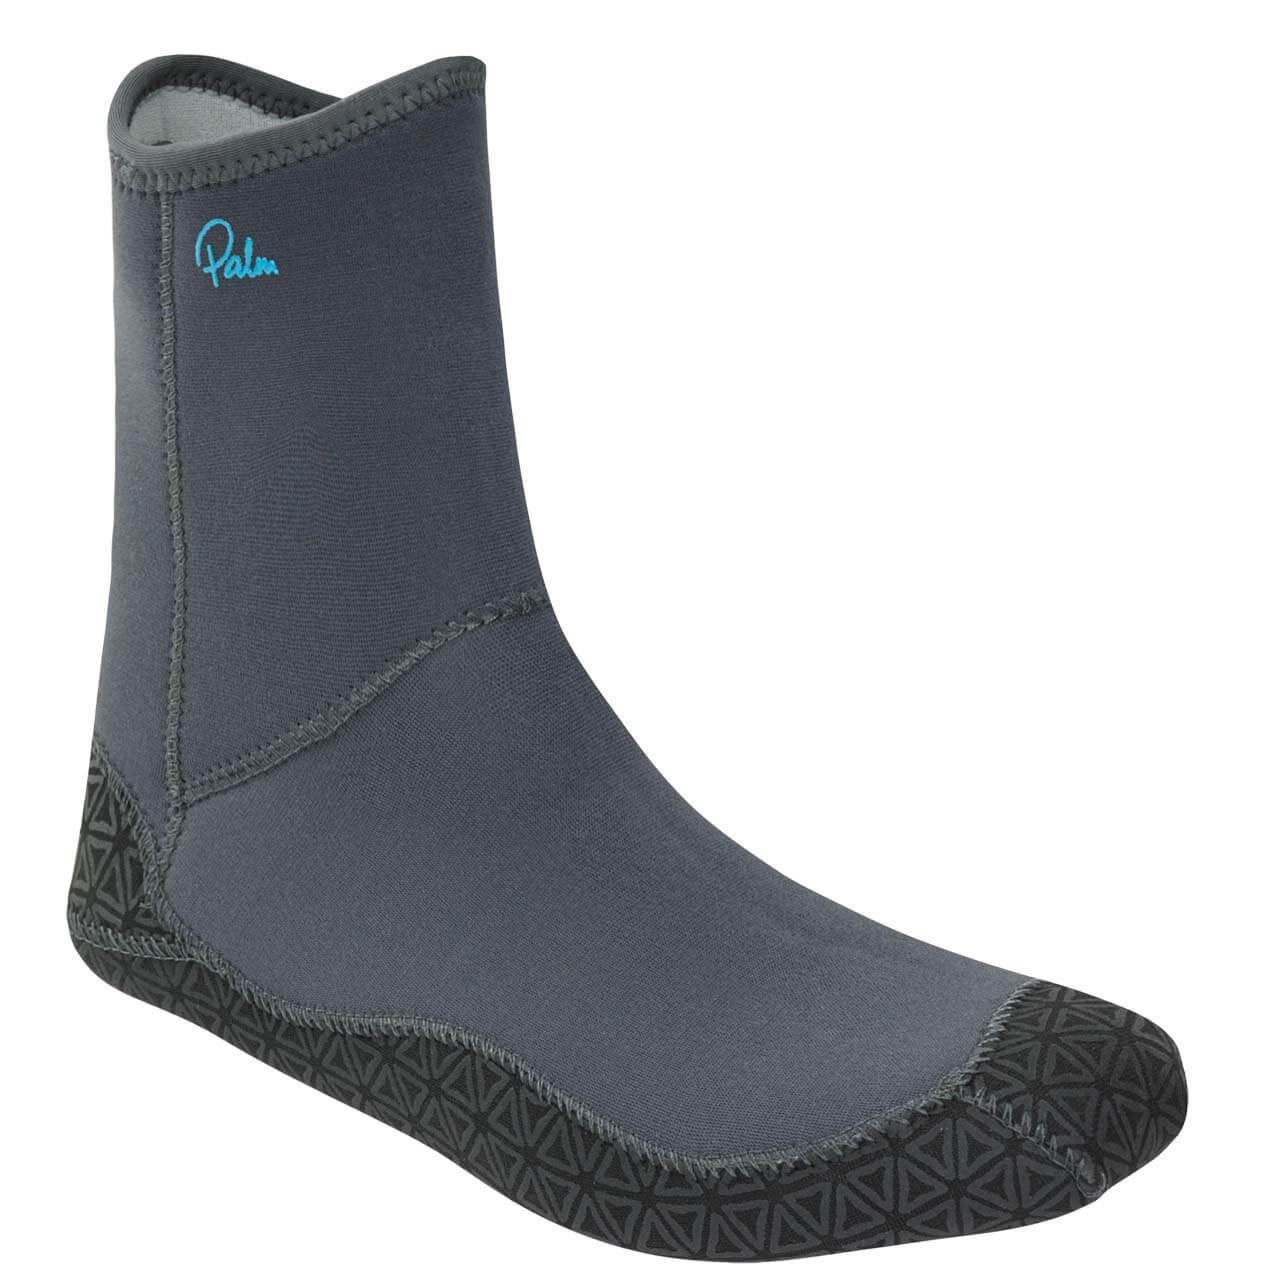 Palm Kick Socks - Jet Grey, M von Palm Equipment